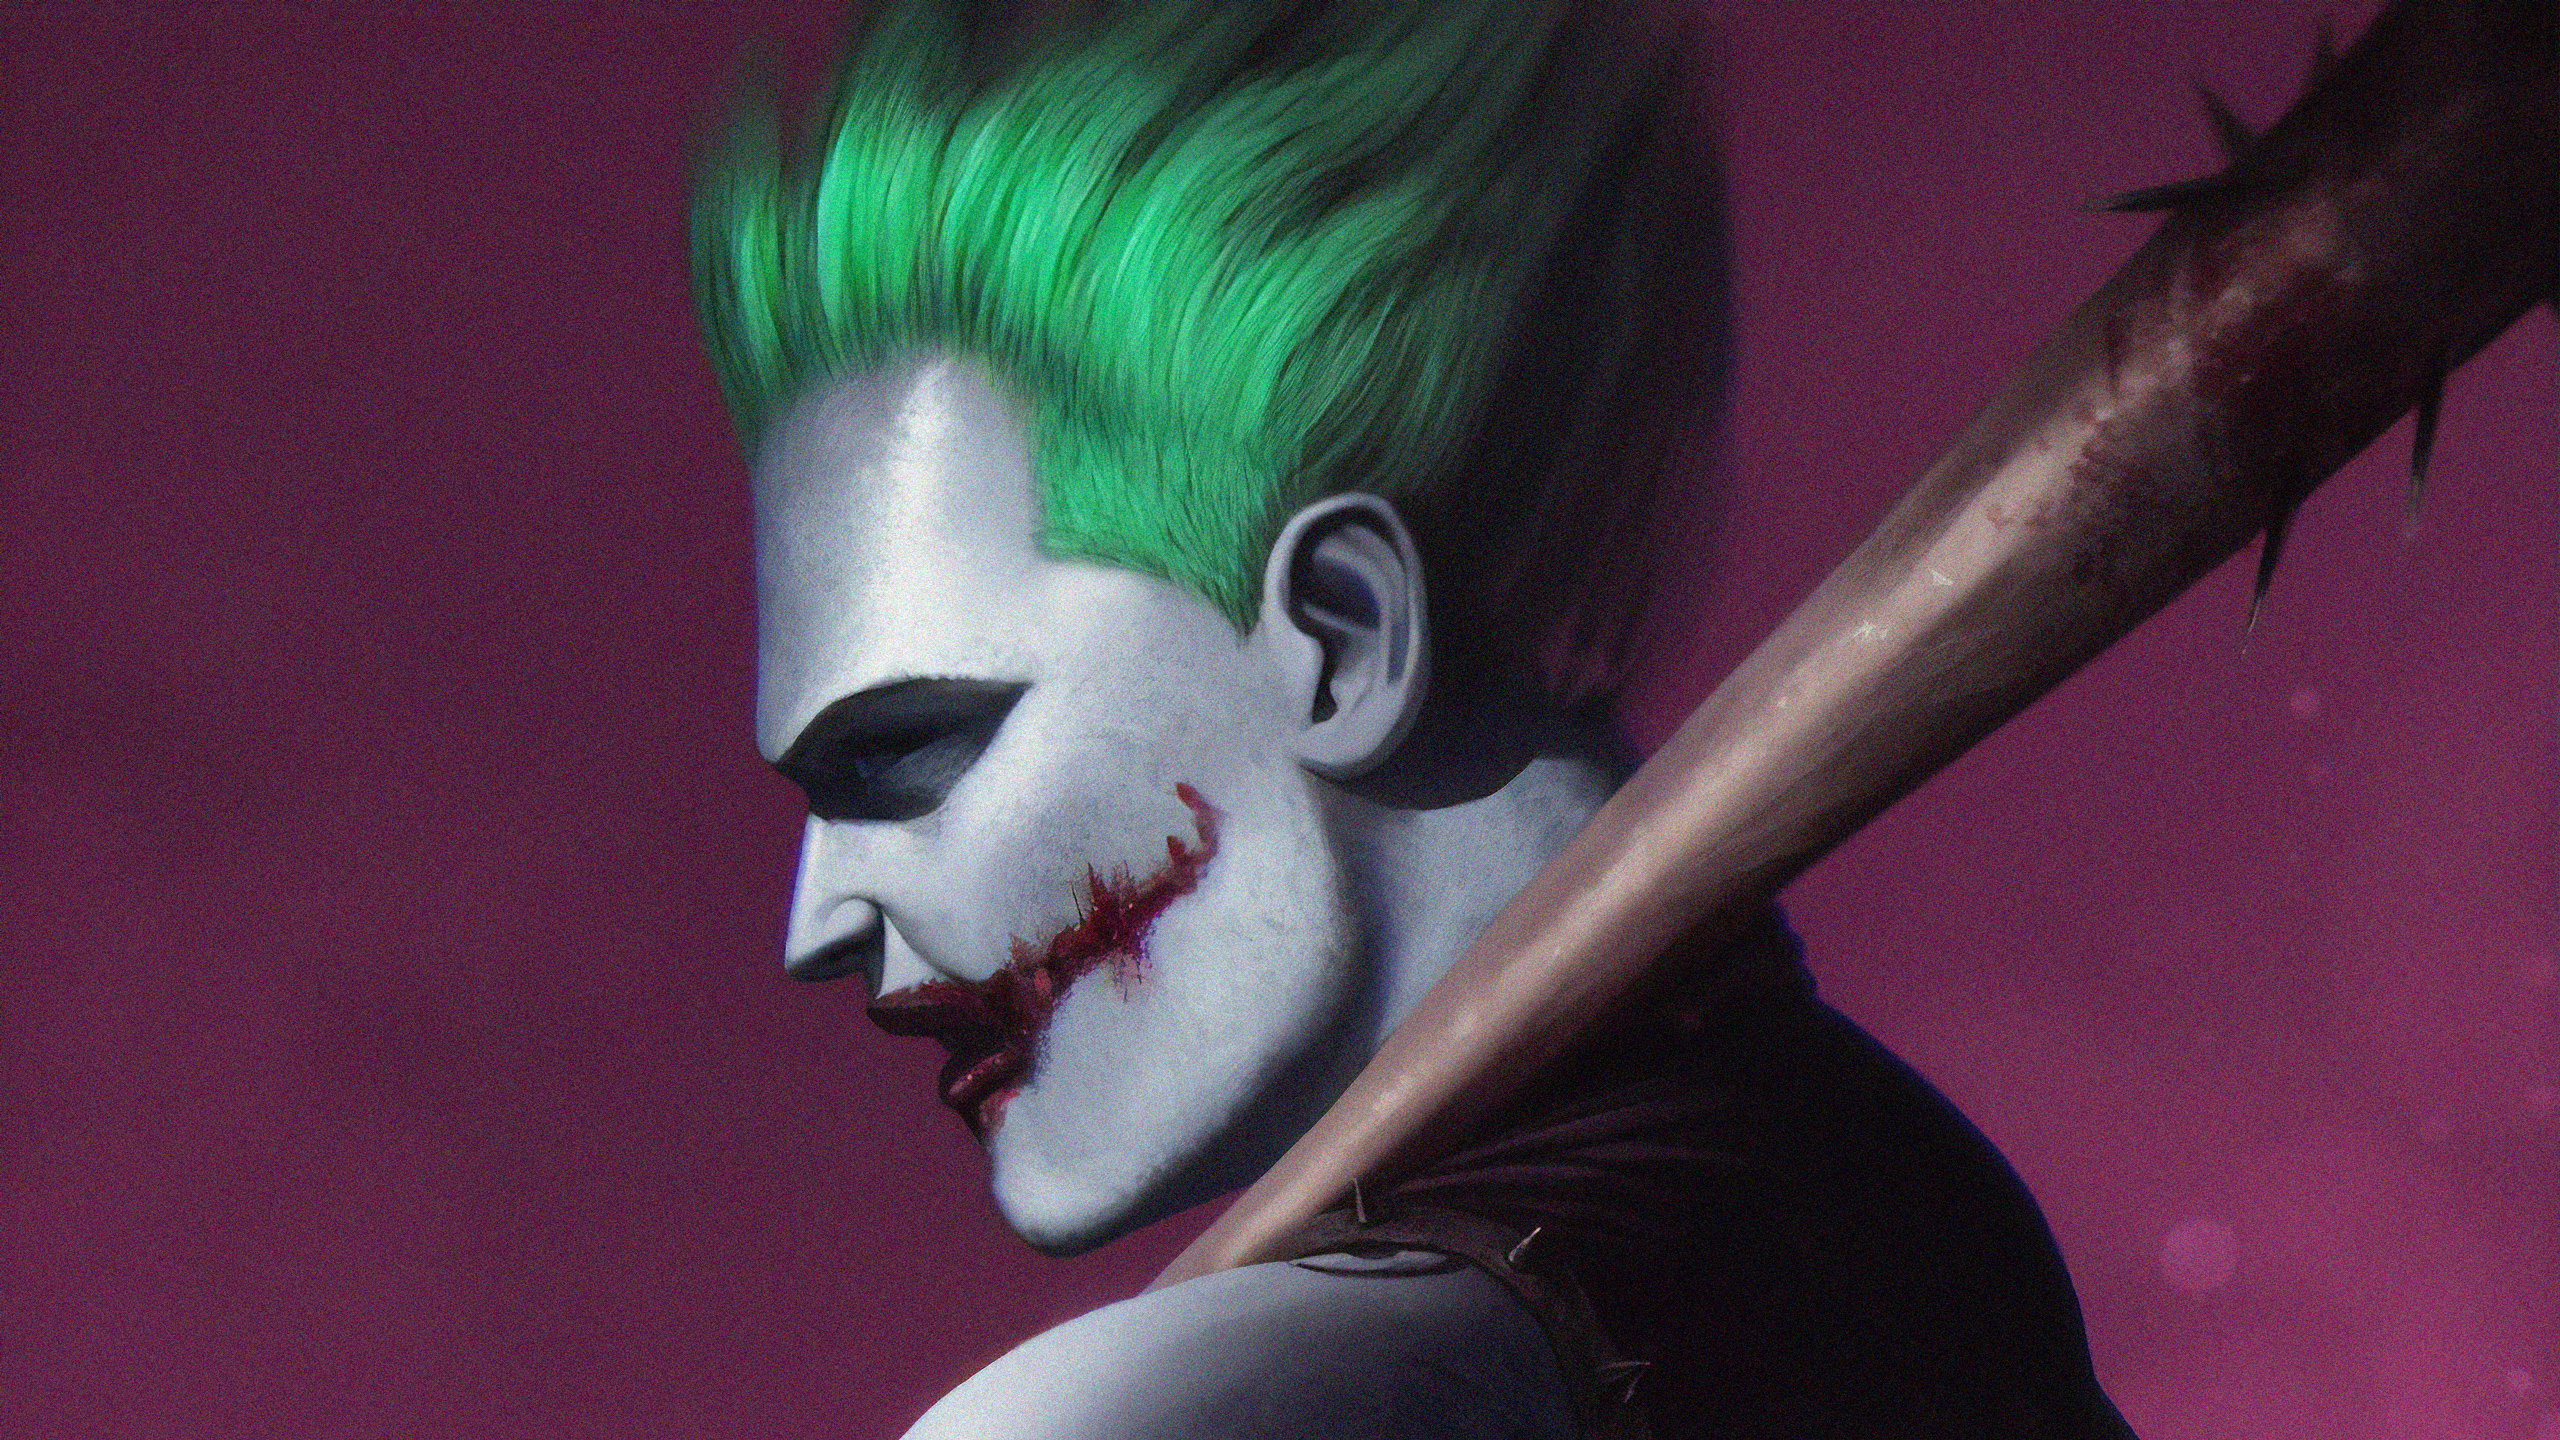 Comics Joker HD Wallpaper | Background Image